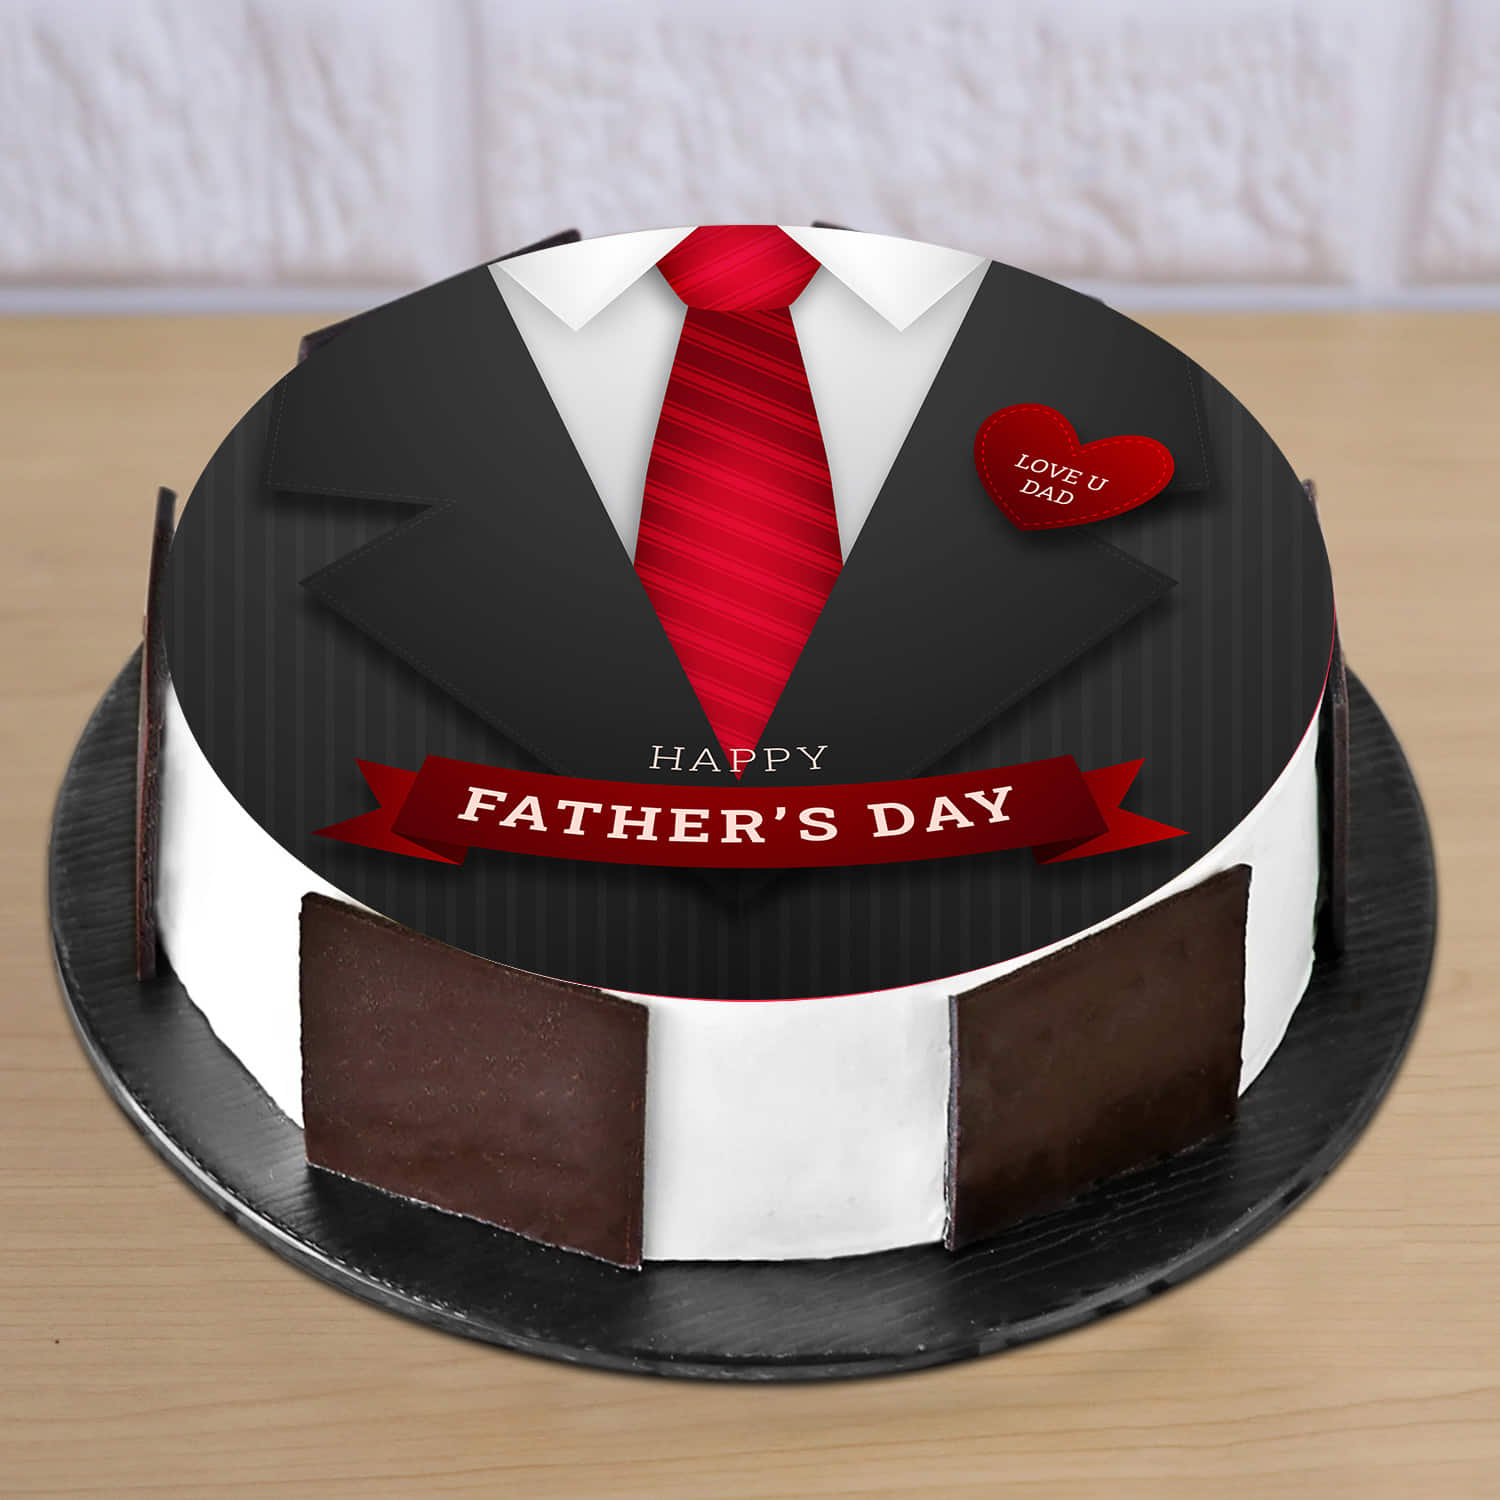 Happy Father's Day Truffle Cake - Dough and Cream